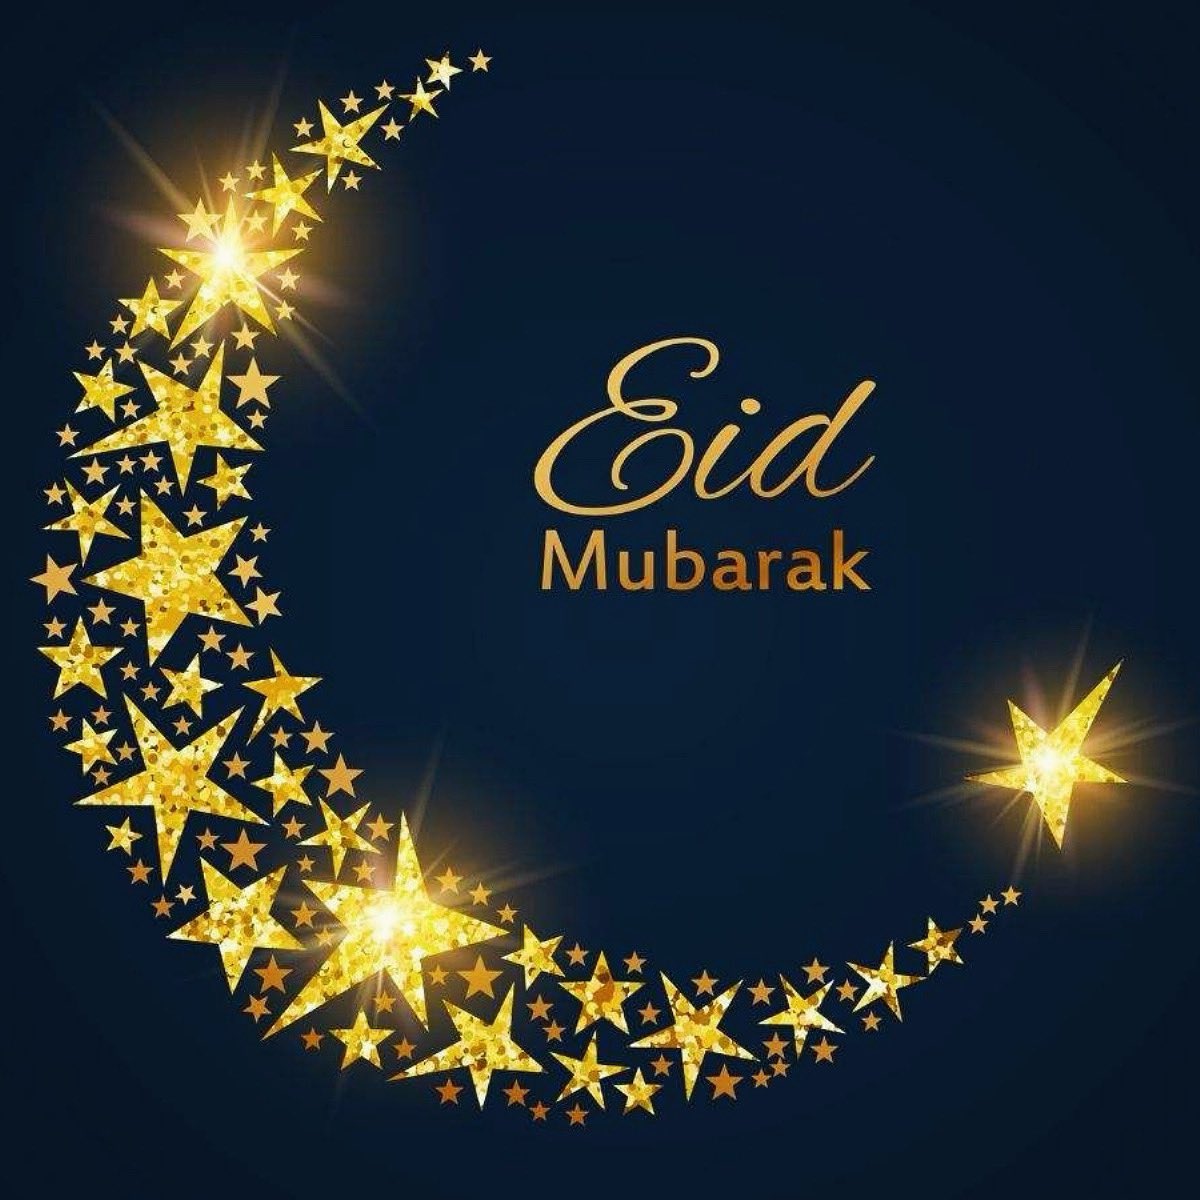 Eid Mubarak from the UG Team. We hope everyone has a wonderful time celebrating